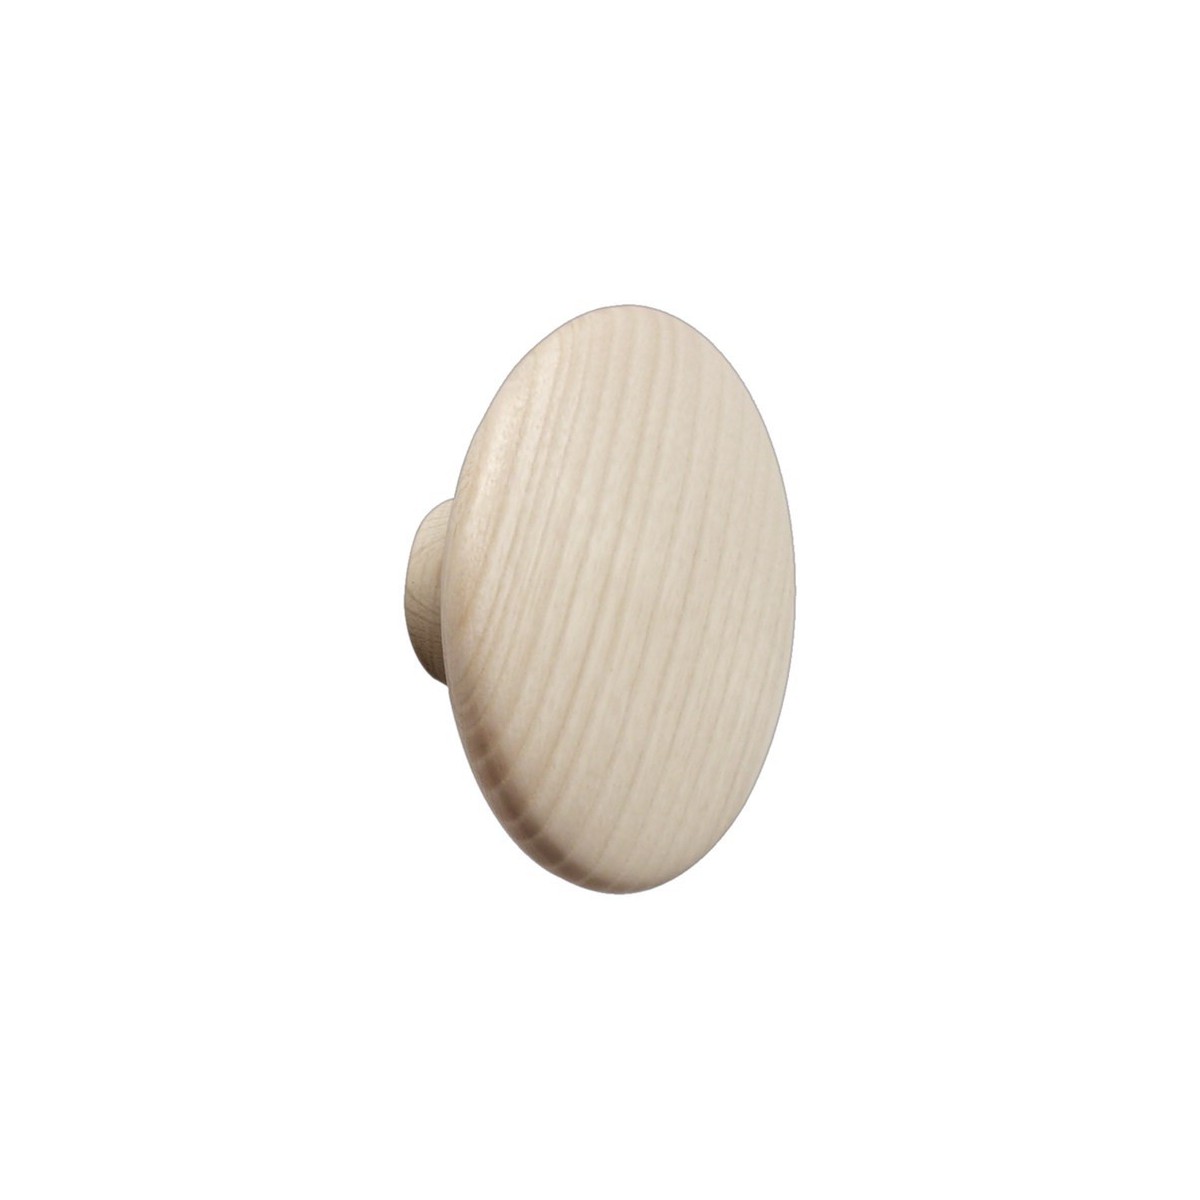 Ø6,5 cm (XS) - ash - The Dots wood